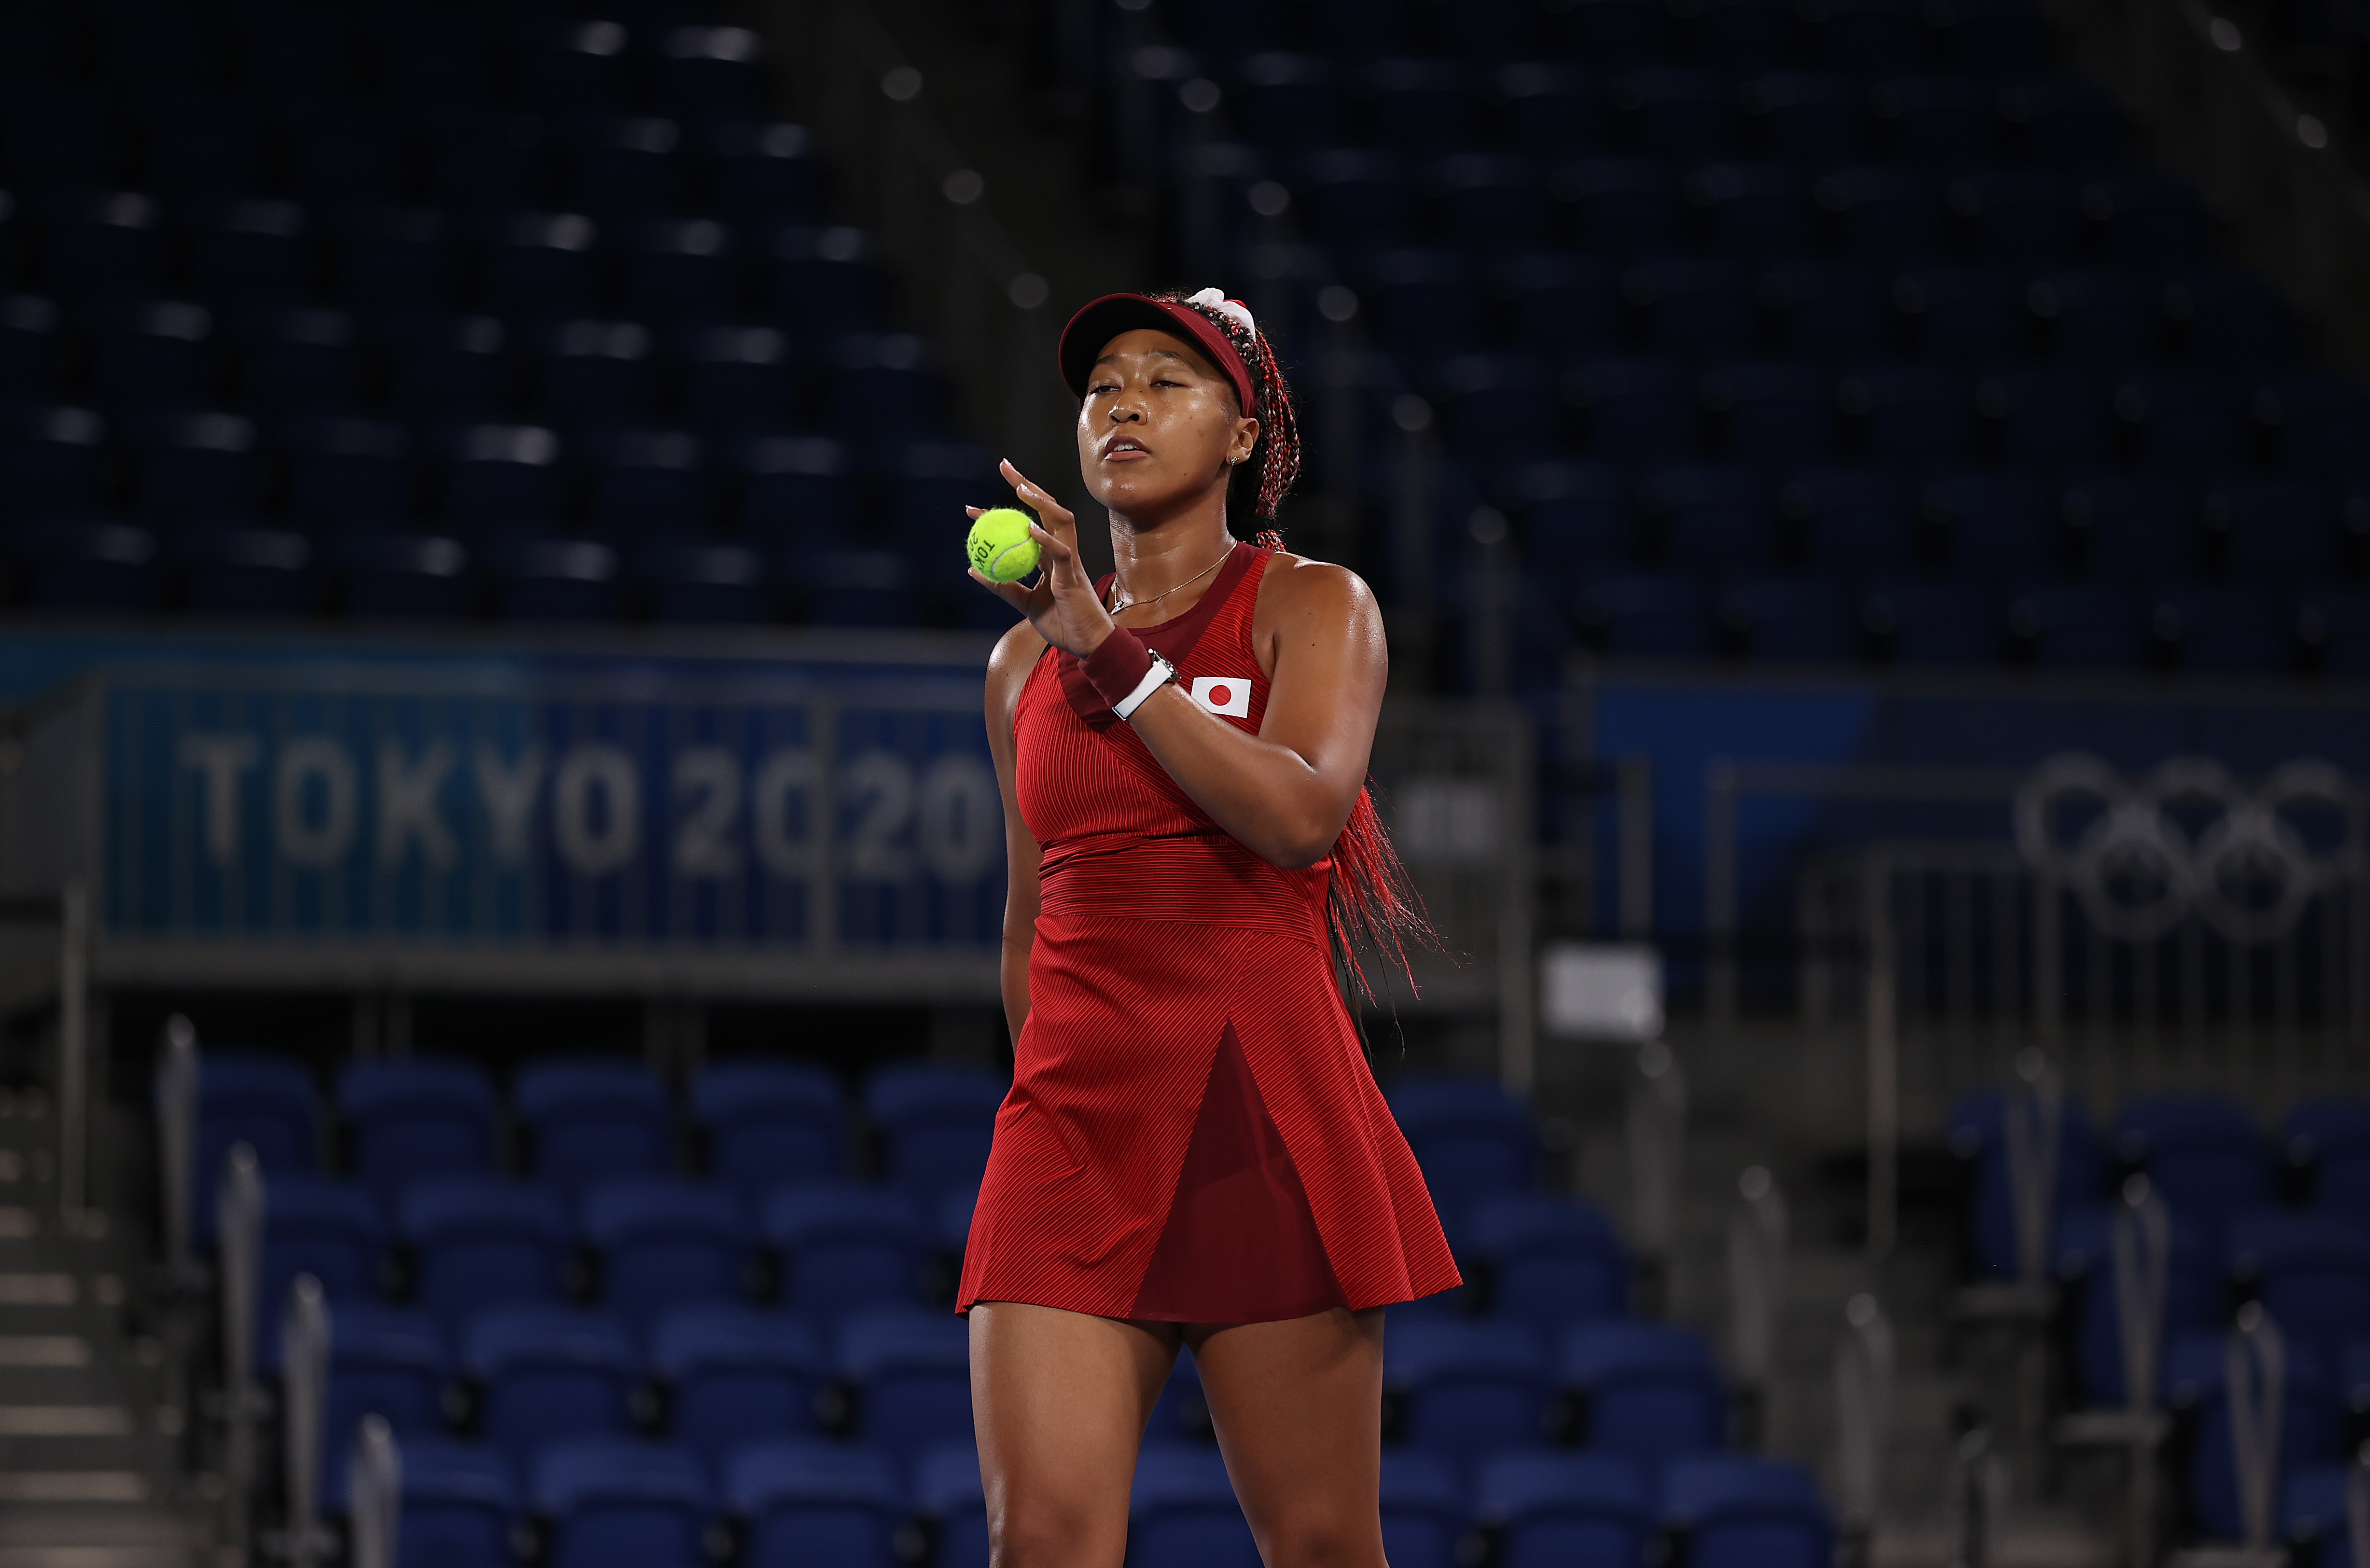 Naomi Osaka of Team Japan prepares to serve during her Women's Singles Third Round match against Marketa Vondrousova